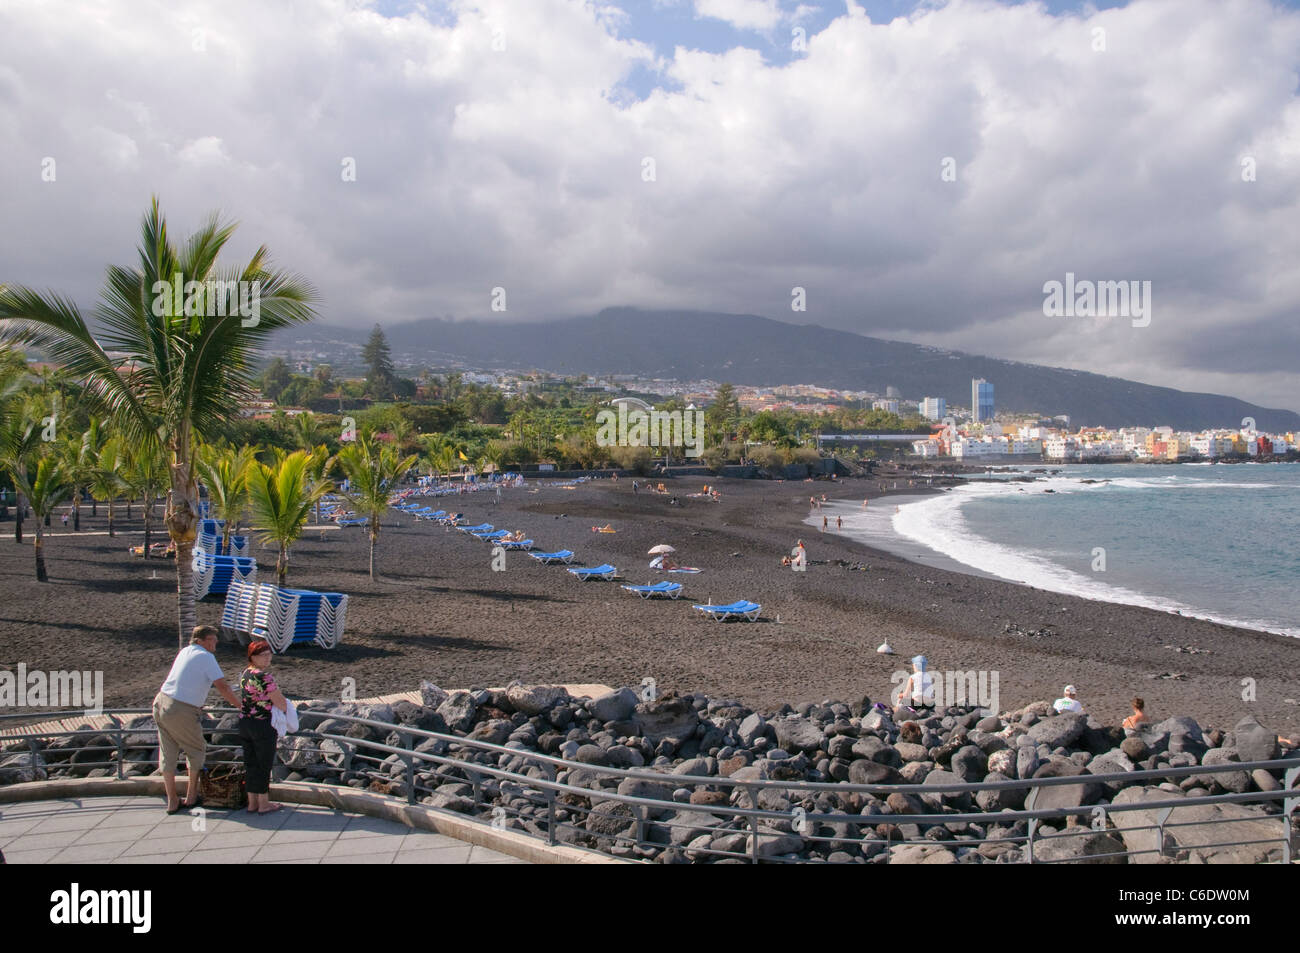 Playa Jardin, Puerto de la Cruz, Tenerife, Canaries, Espagne, Europe Banque D'Images